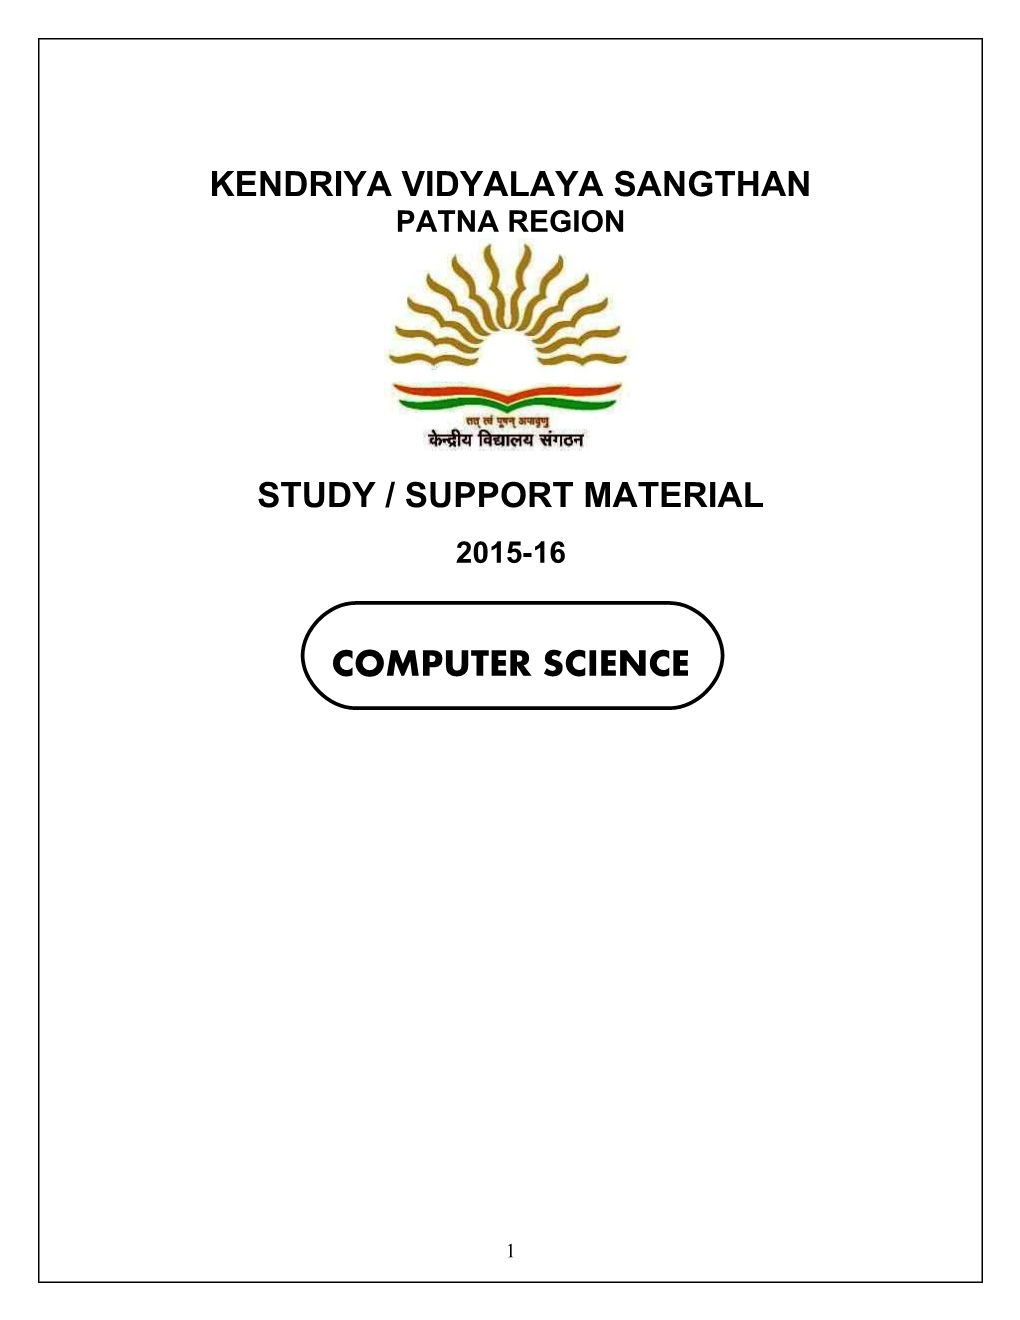 Kendriya Vidyalaya Sangthan